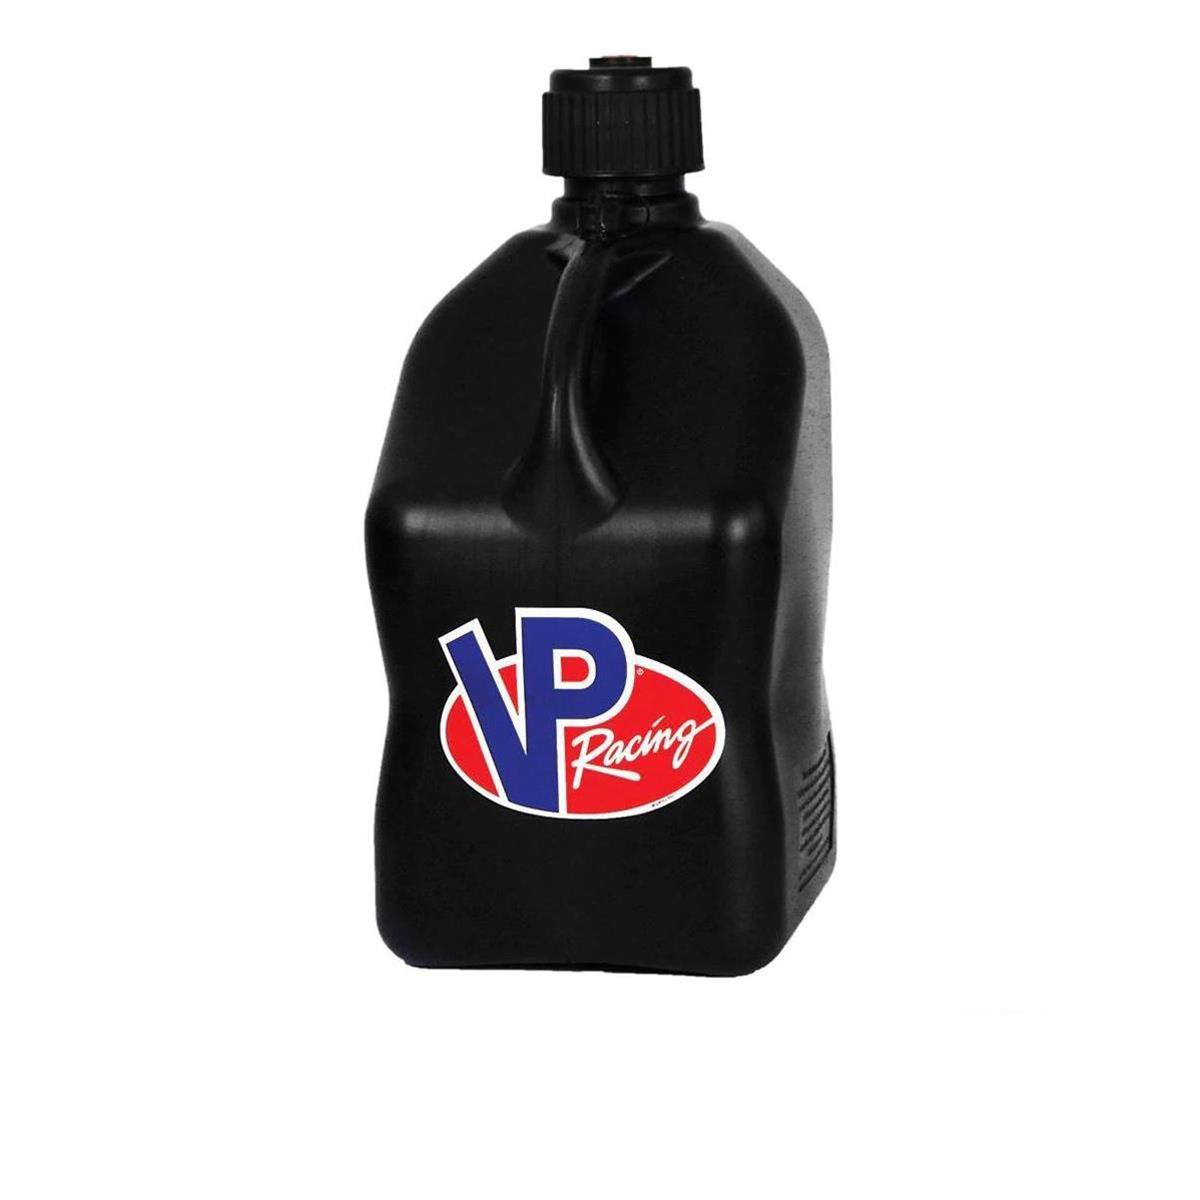 VP Racing Motorsports Fuel Jug - 5.5 gallons - Black